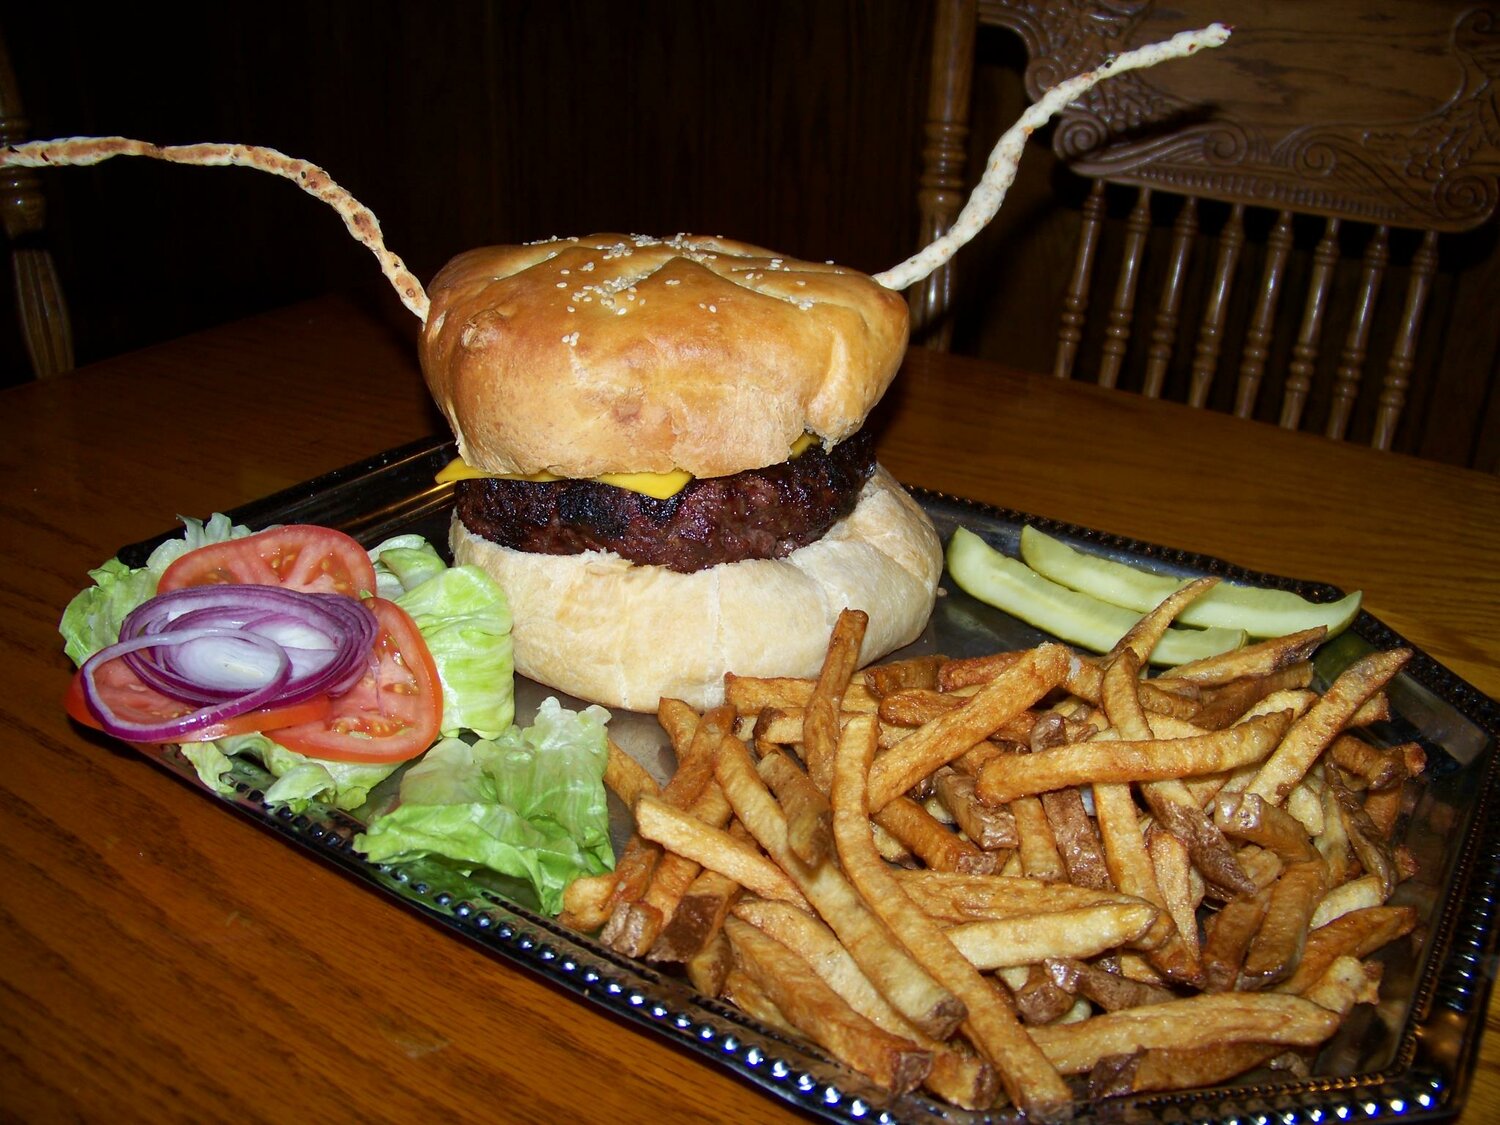 The Old Schoolhouse's infamous Texas Longhorn burger.